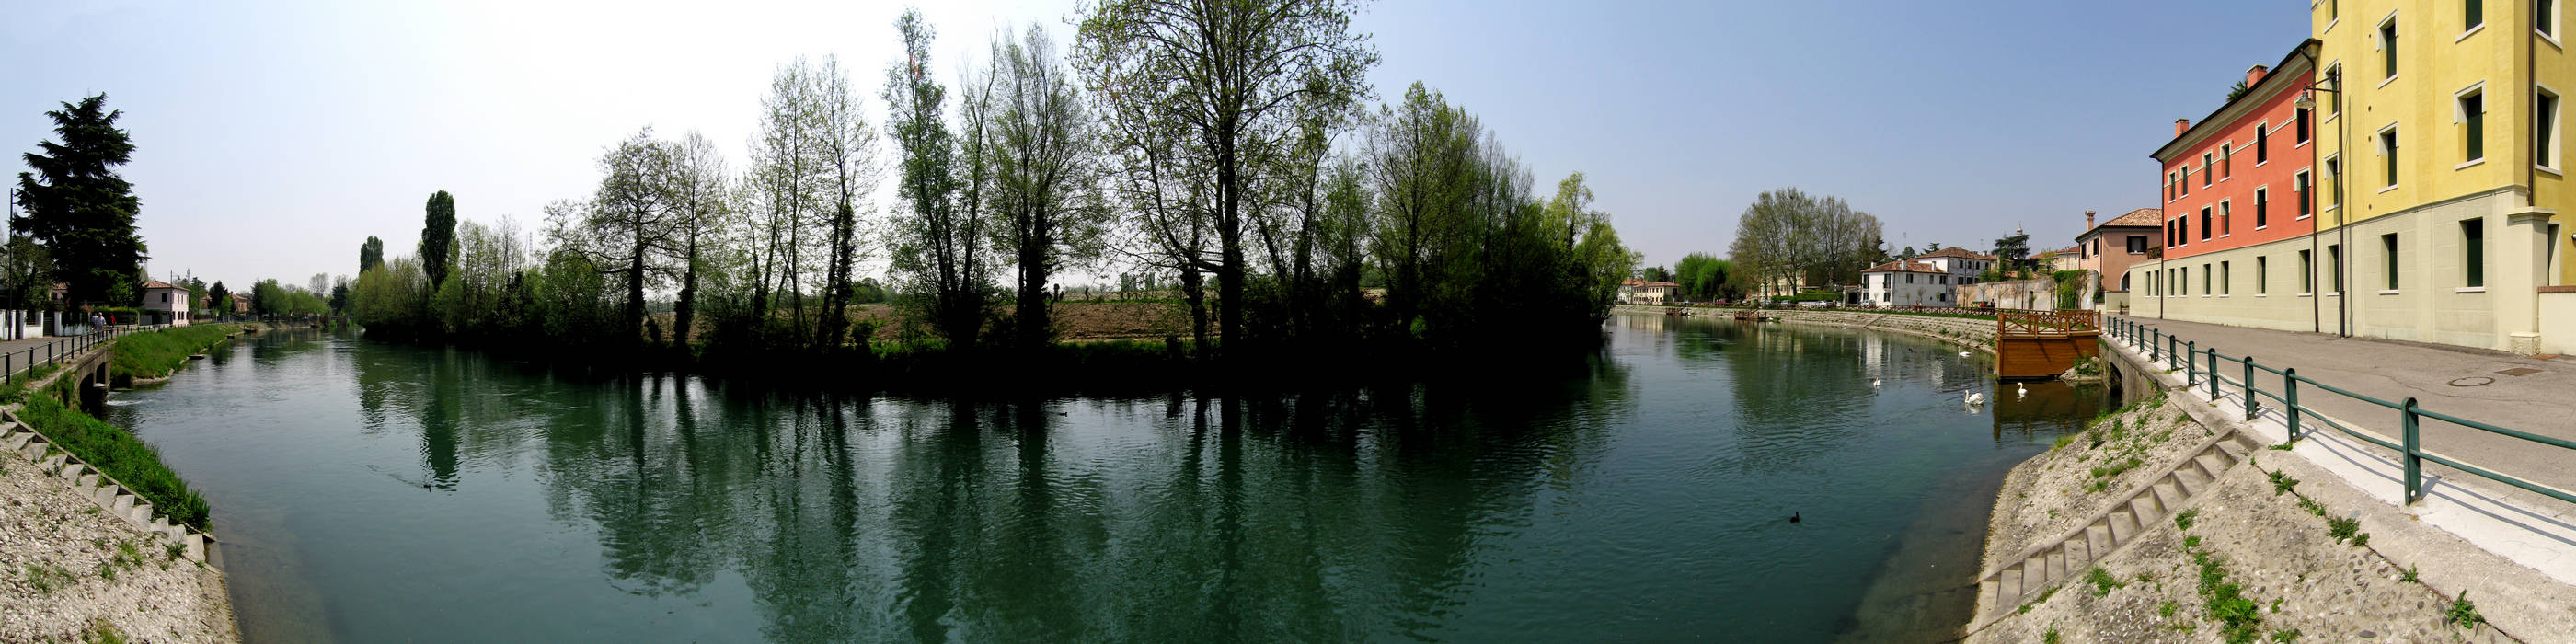 Treviso - Alzaie lungo il fiume Sile